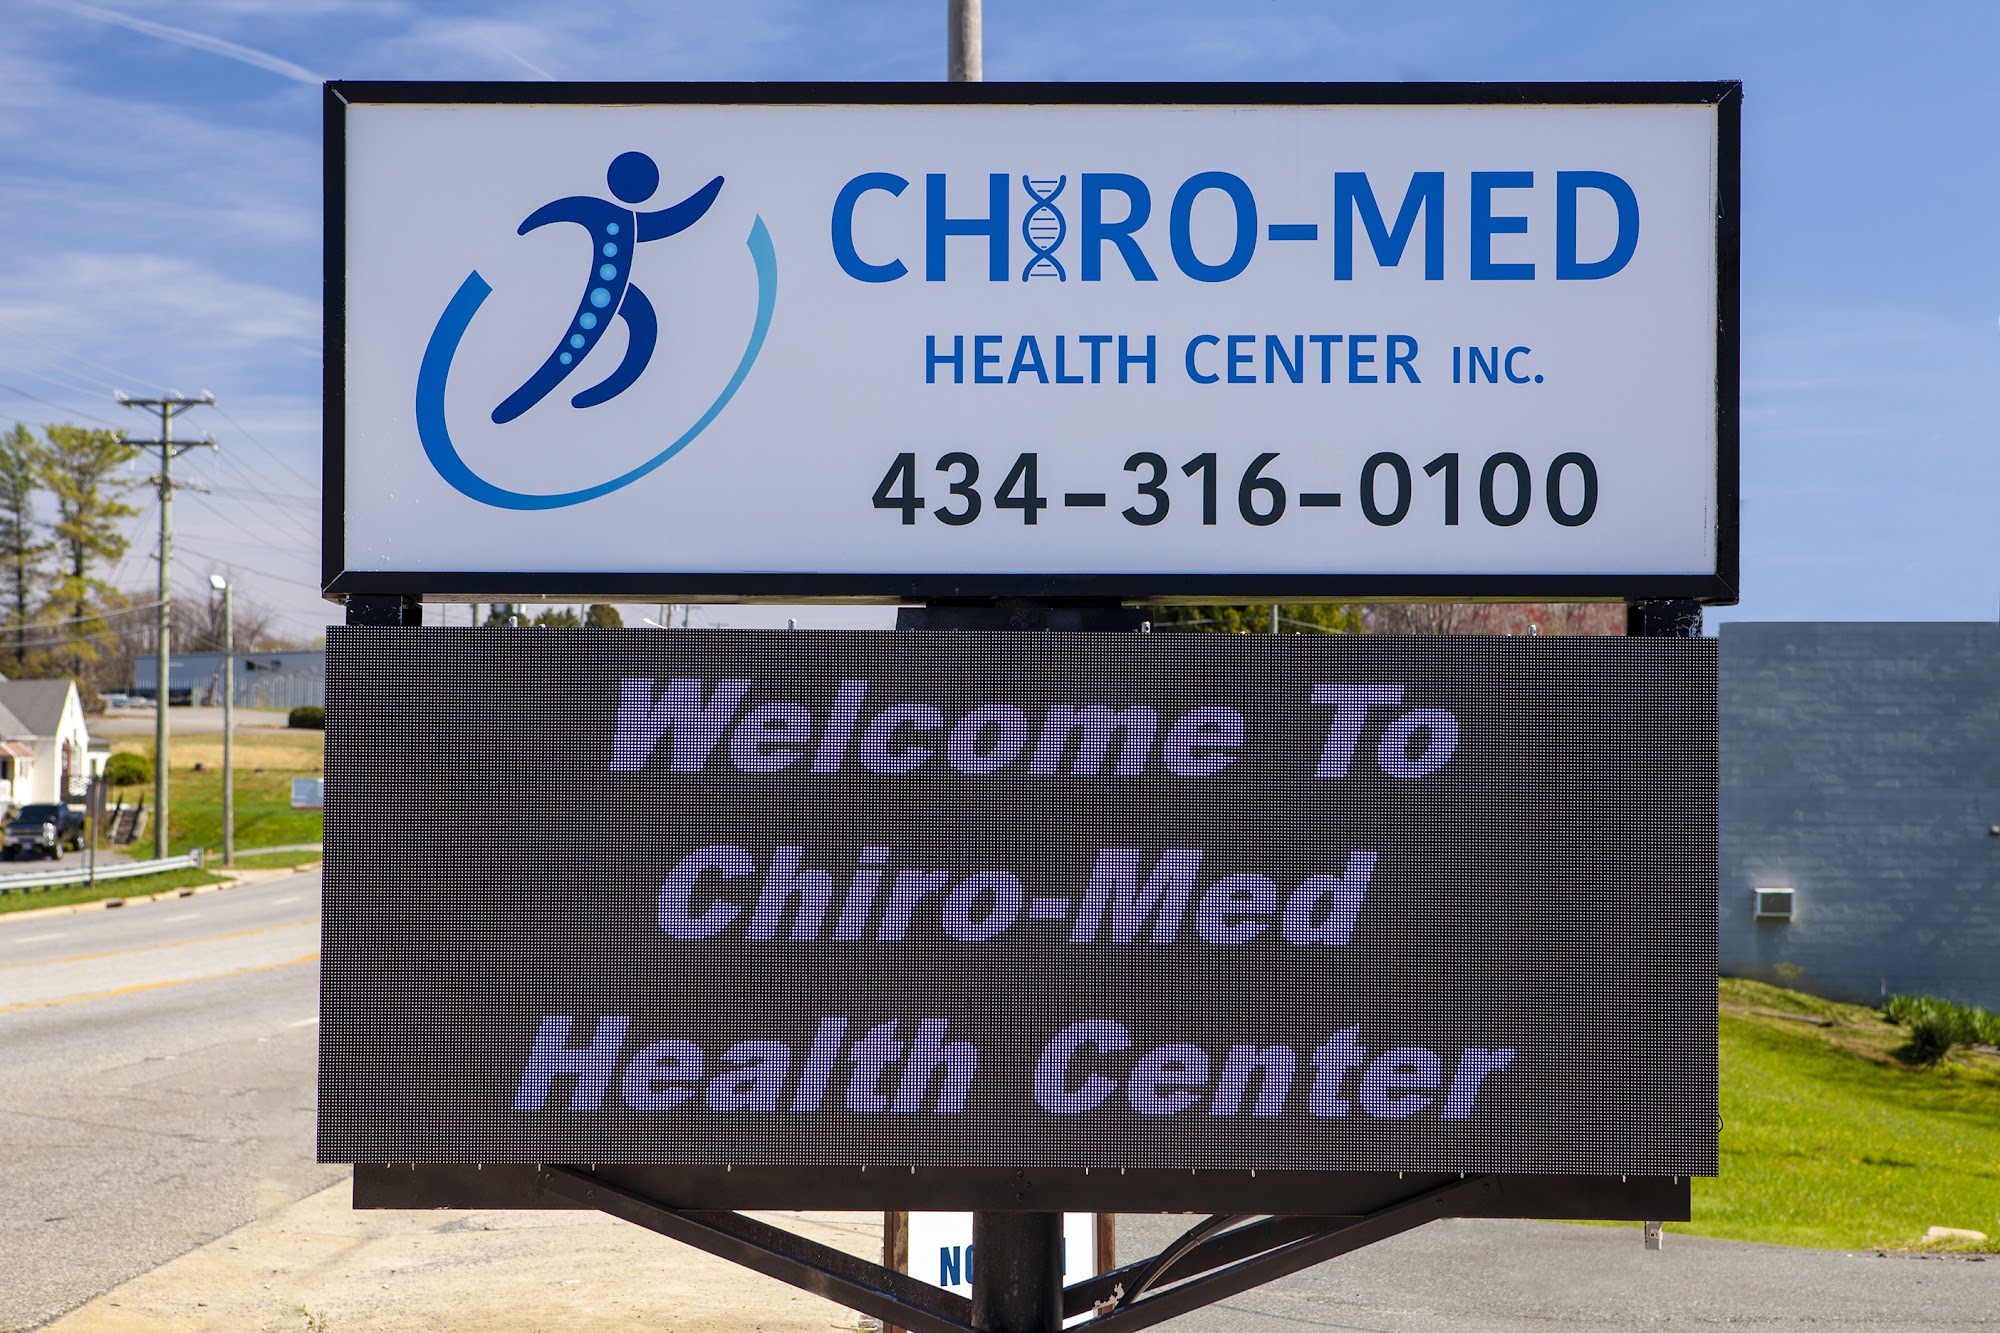 Chiro-Med Health Center Inc: Dr. Jennifer Tinoosh